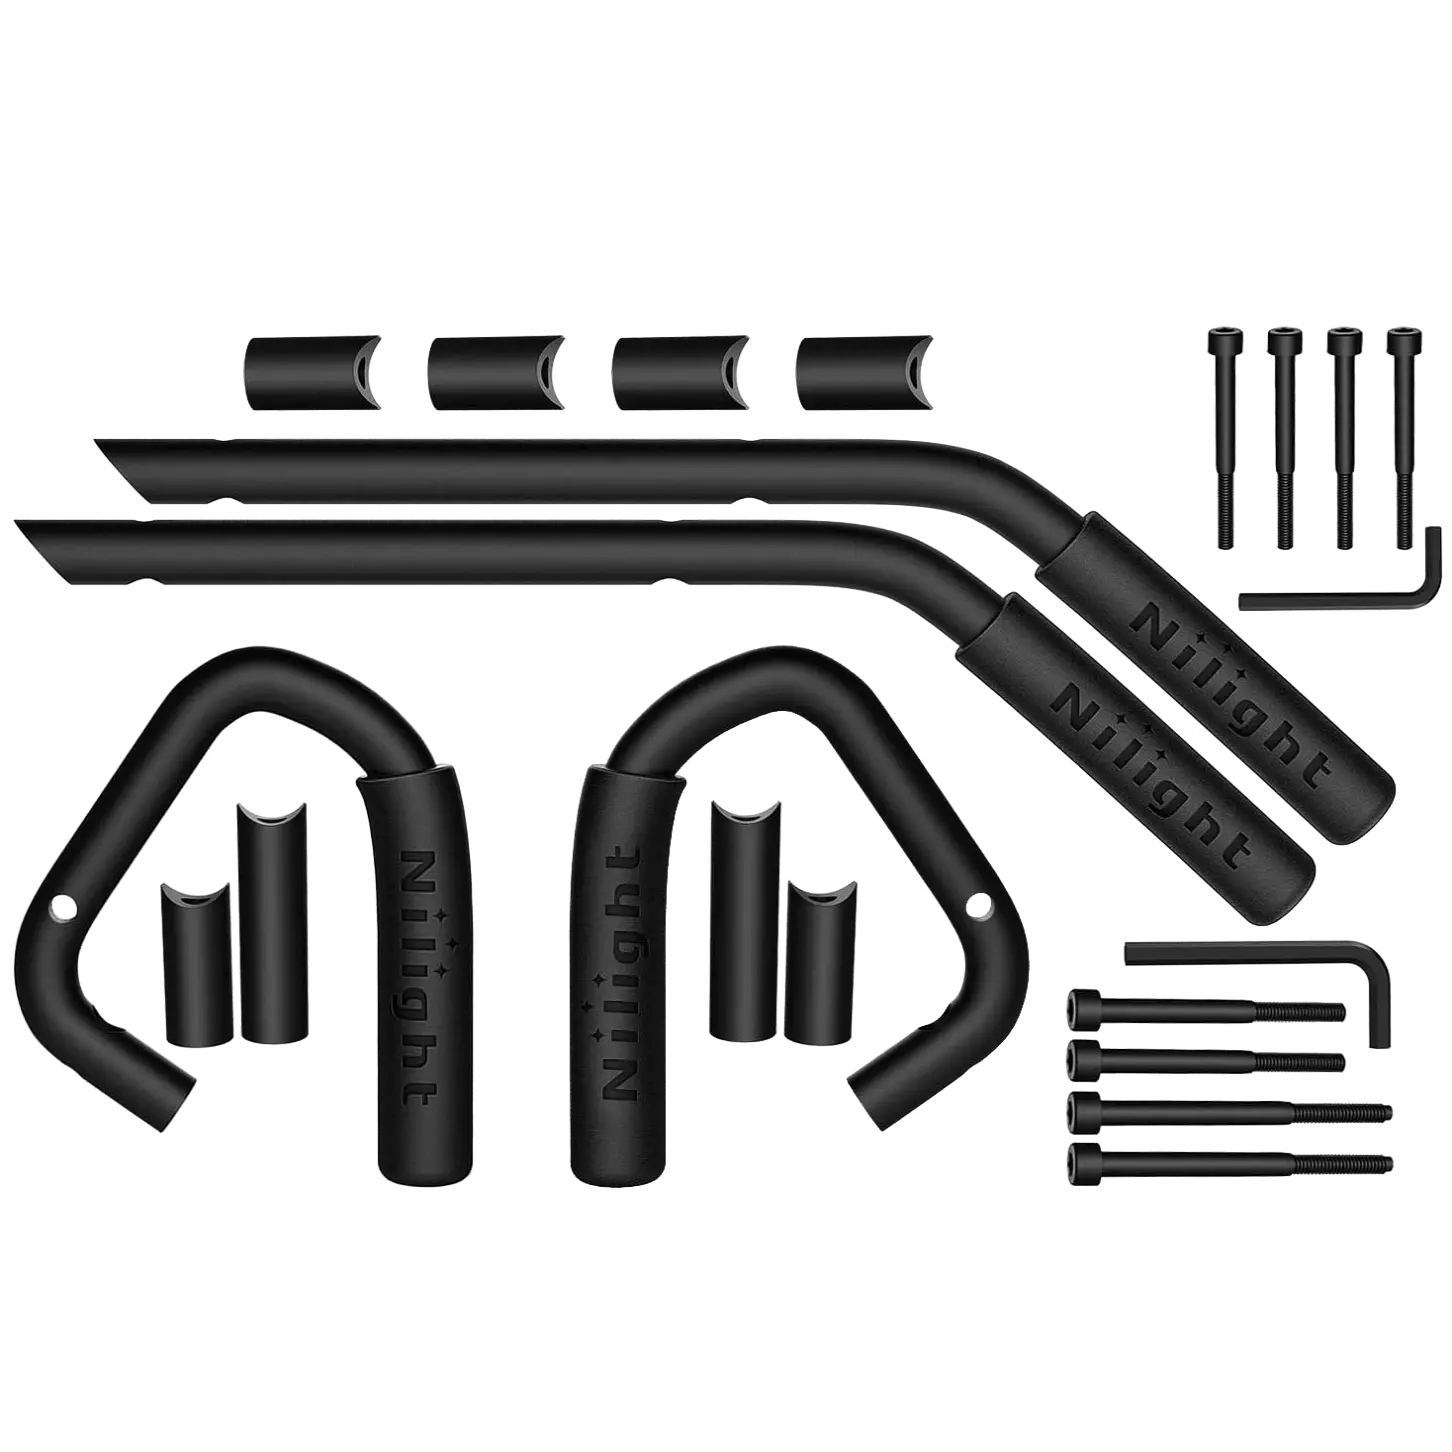 Mounting Accessories 2007-2018 Jeep Wrangler JK JKU Front Rear Grab Aluminum Roll Bar Grip Handles